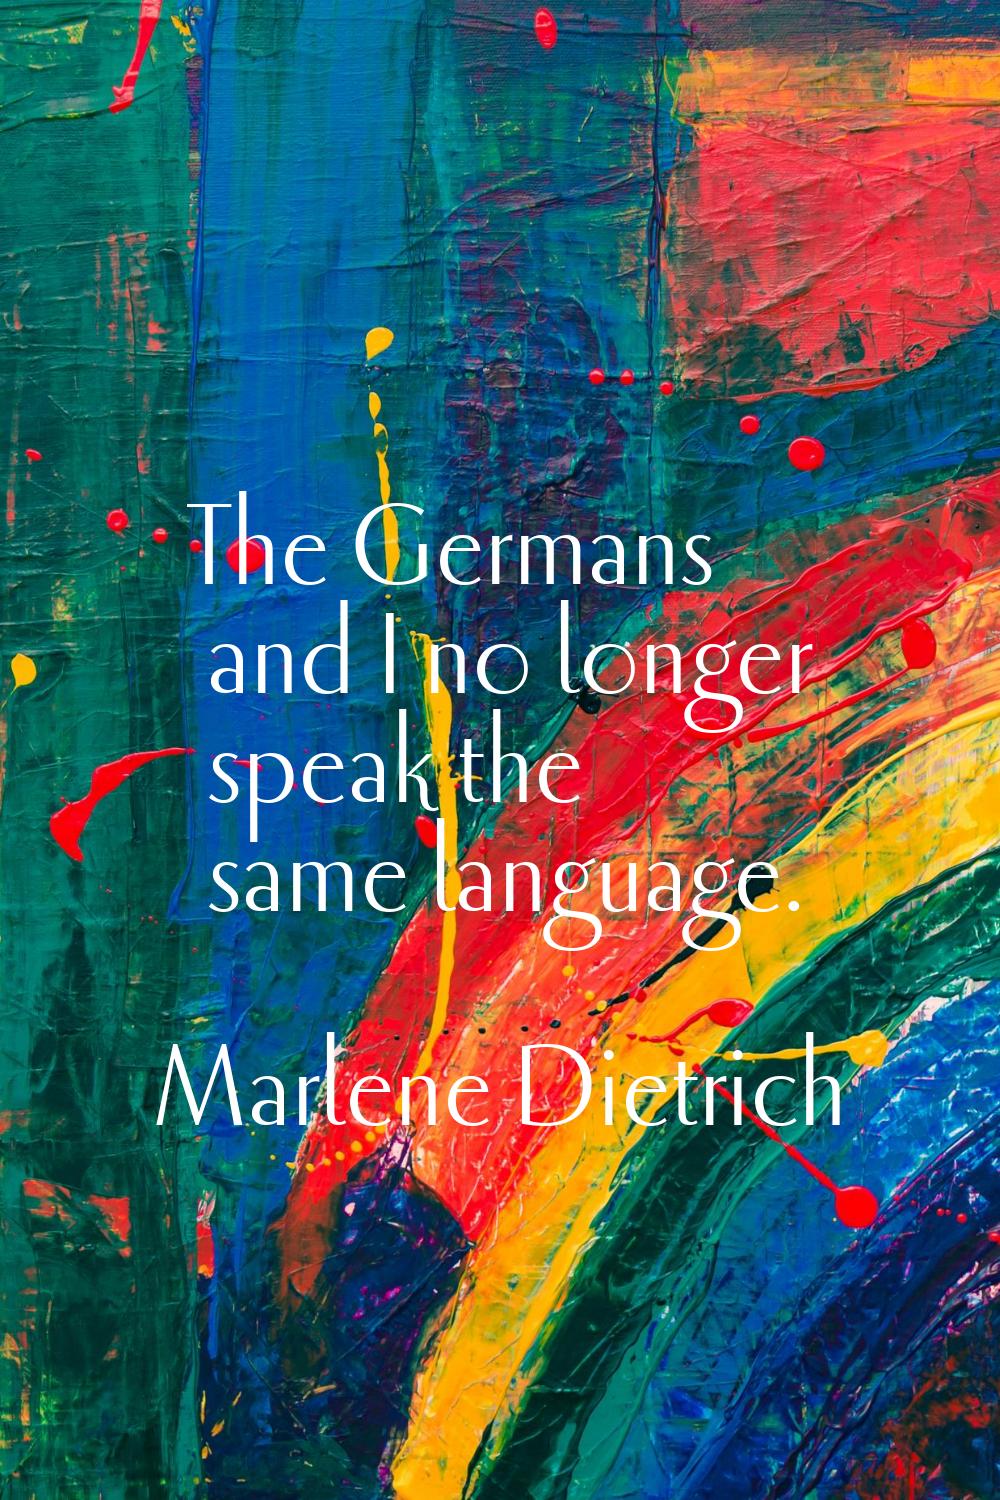 The Germans and I no longer speak the same language.